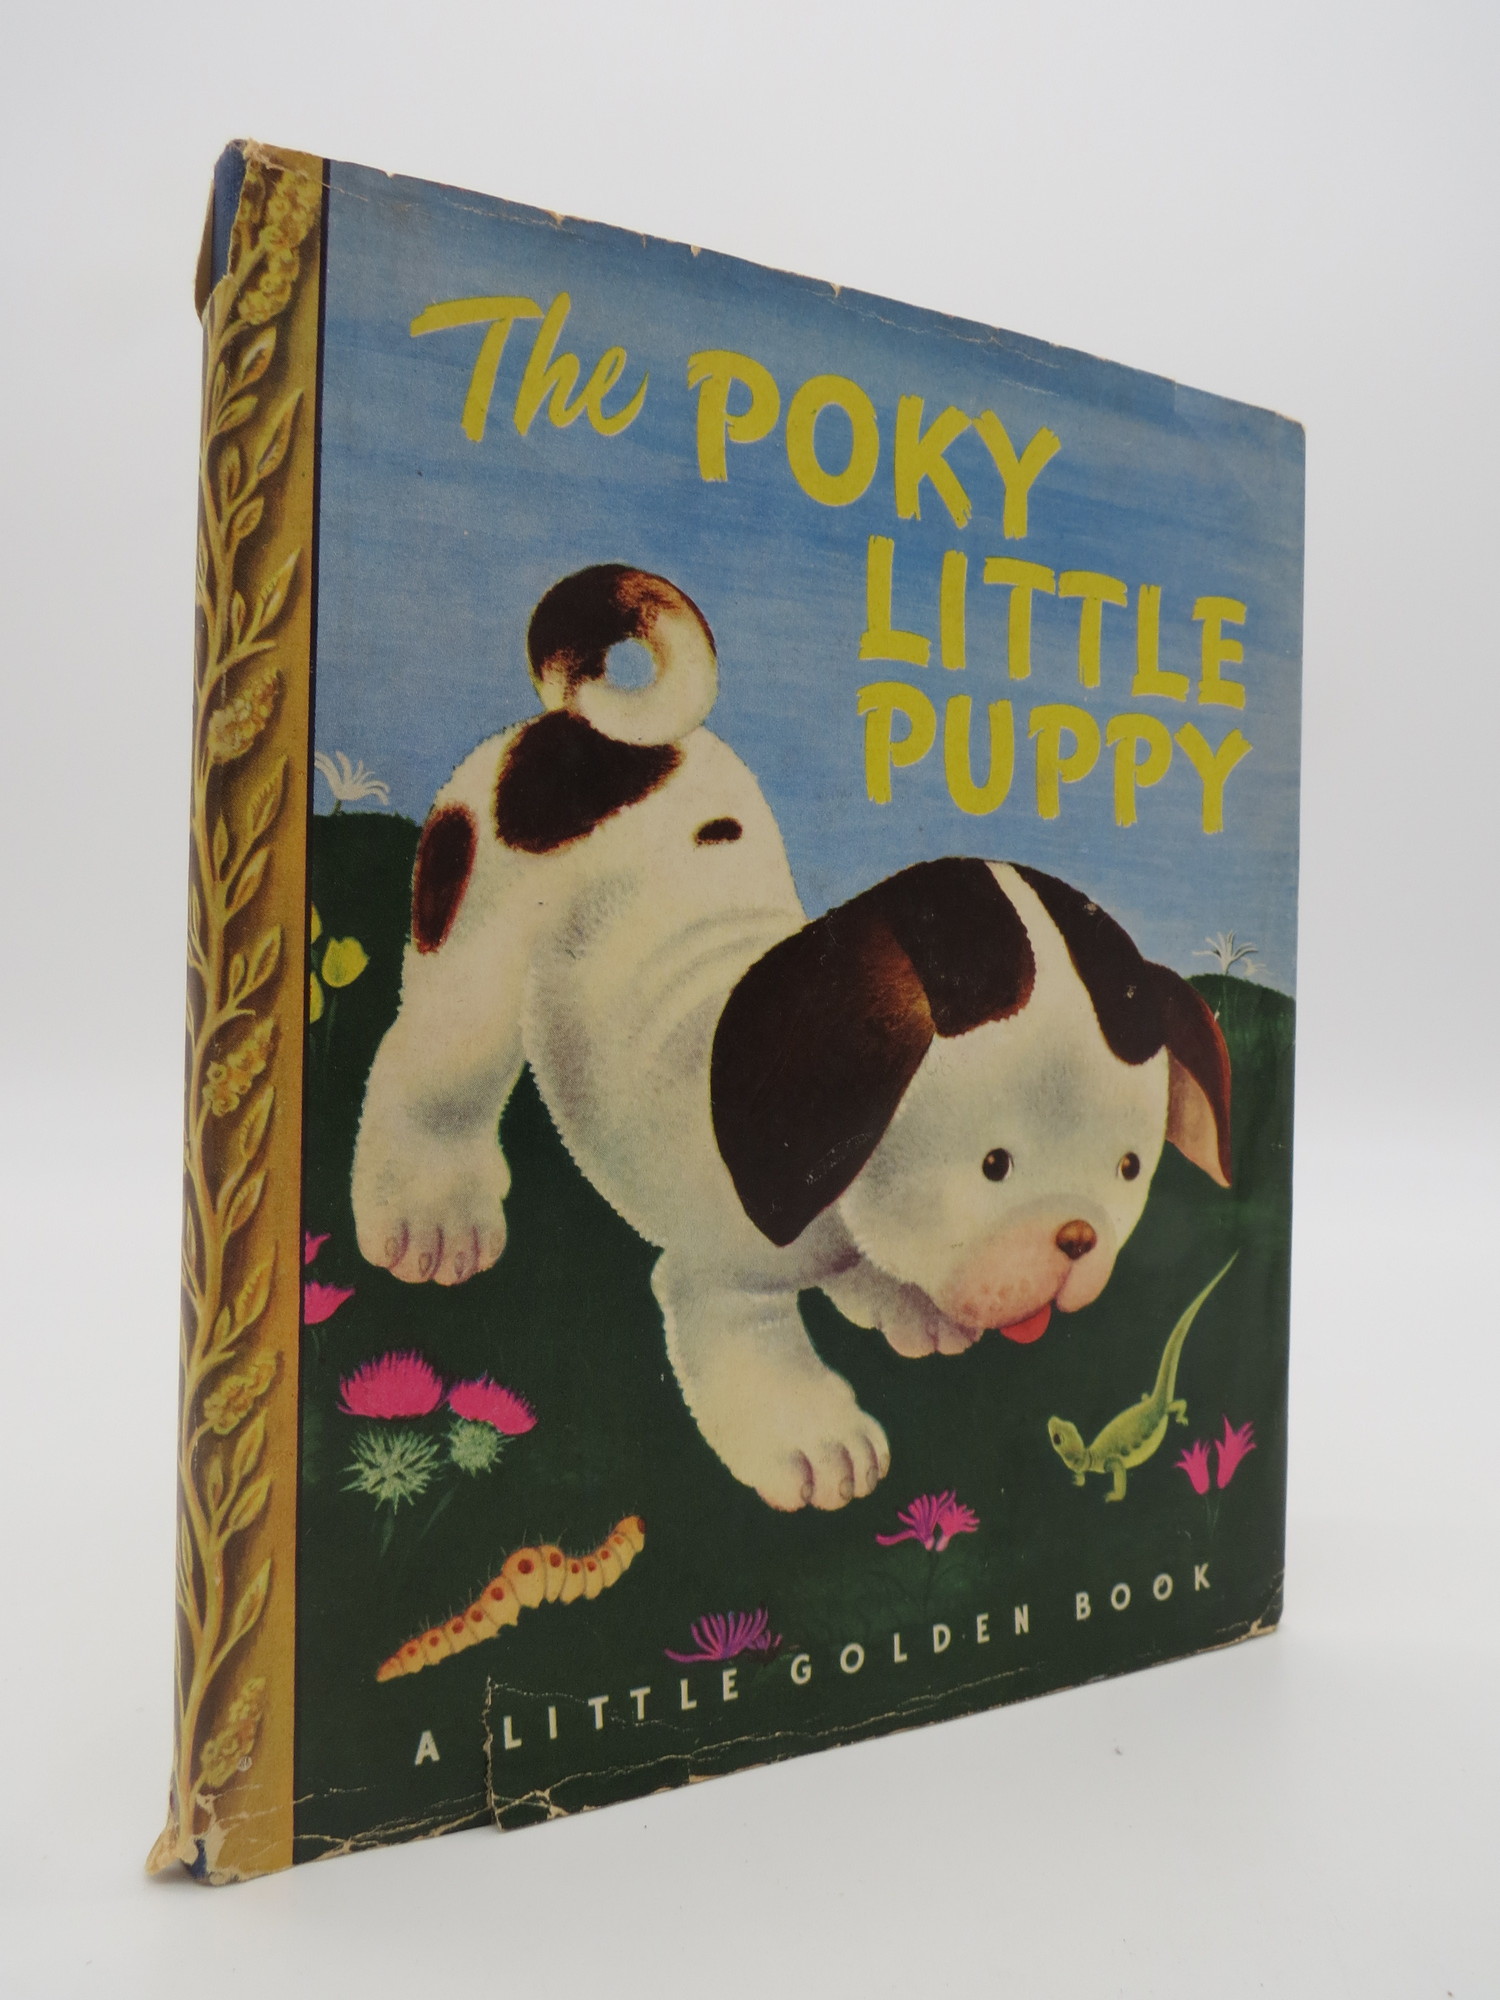 THE POKY LITTLE PUPPY - Janette Sebring Lowrey